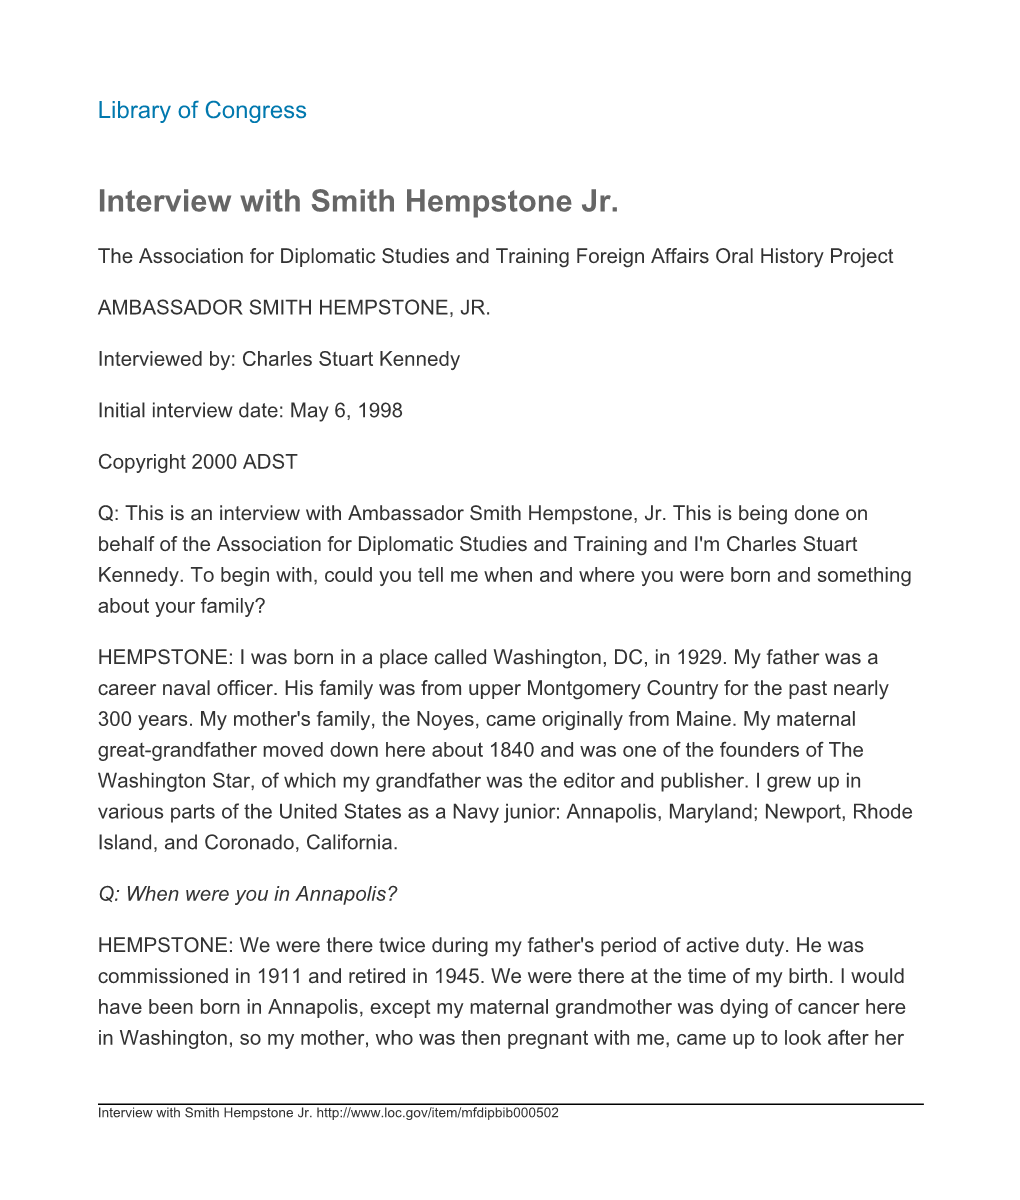 Interview with Smith Hempstone Jr